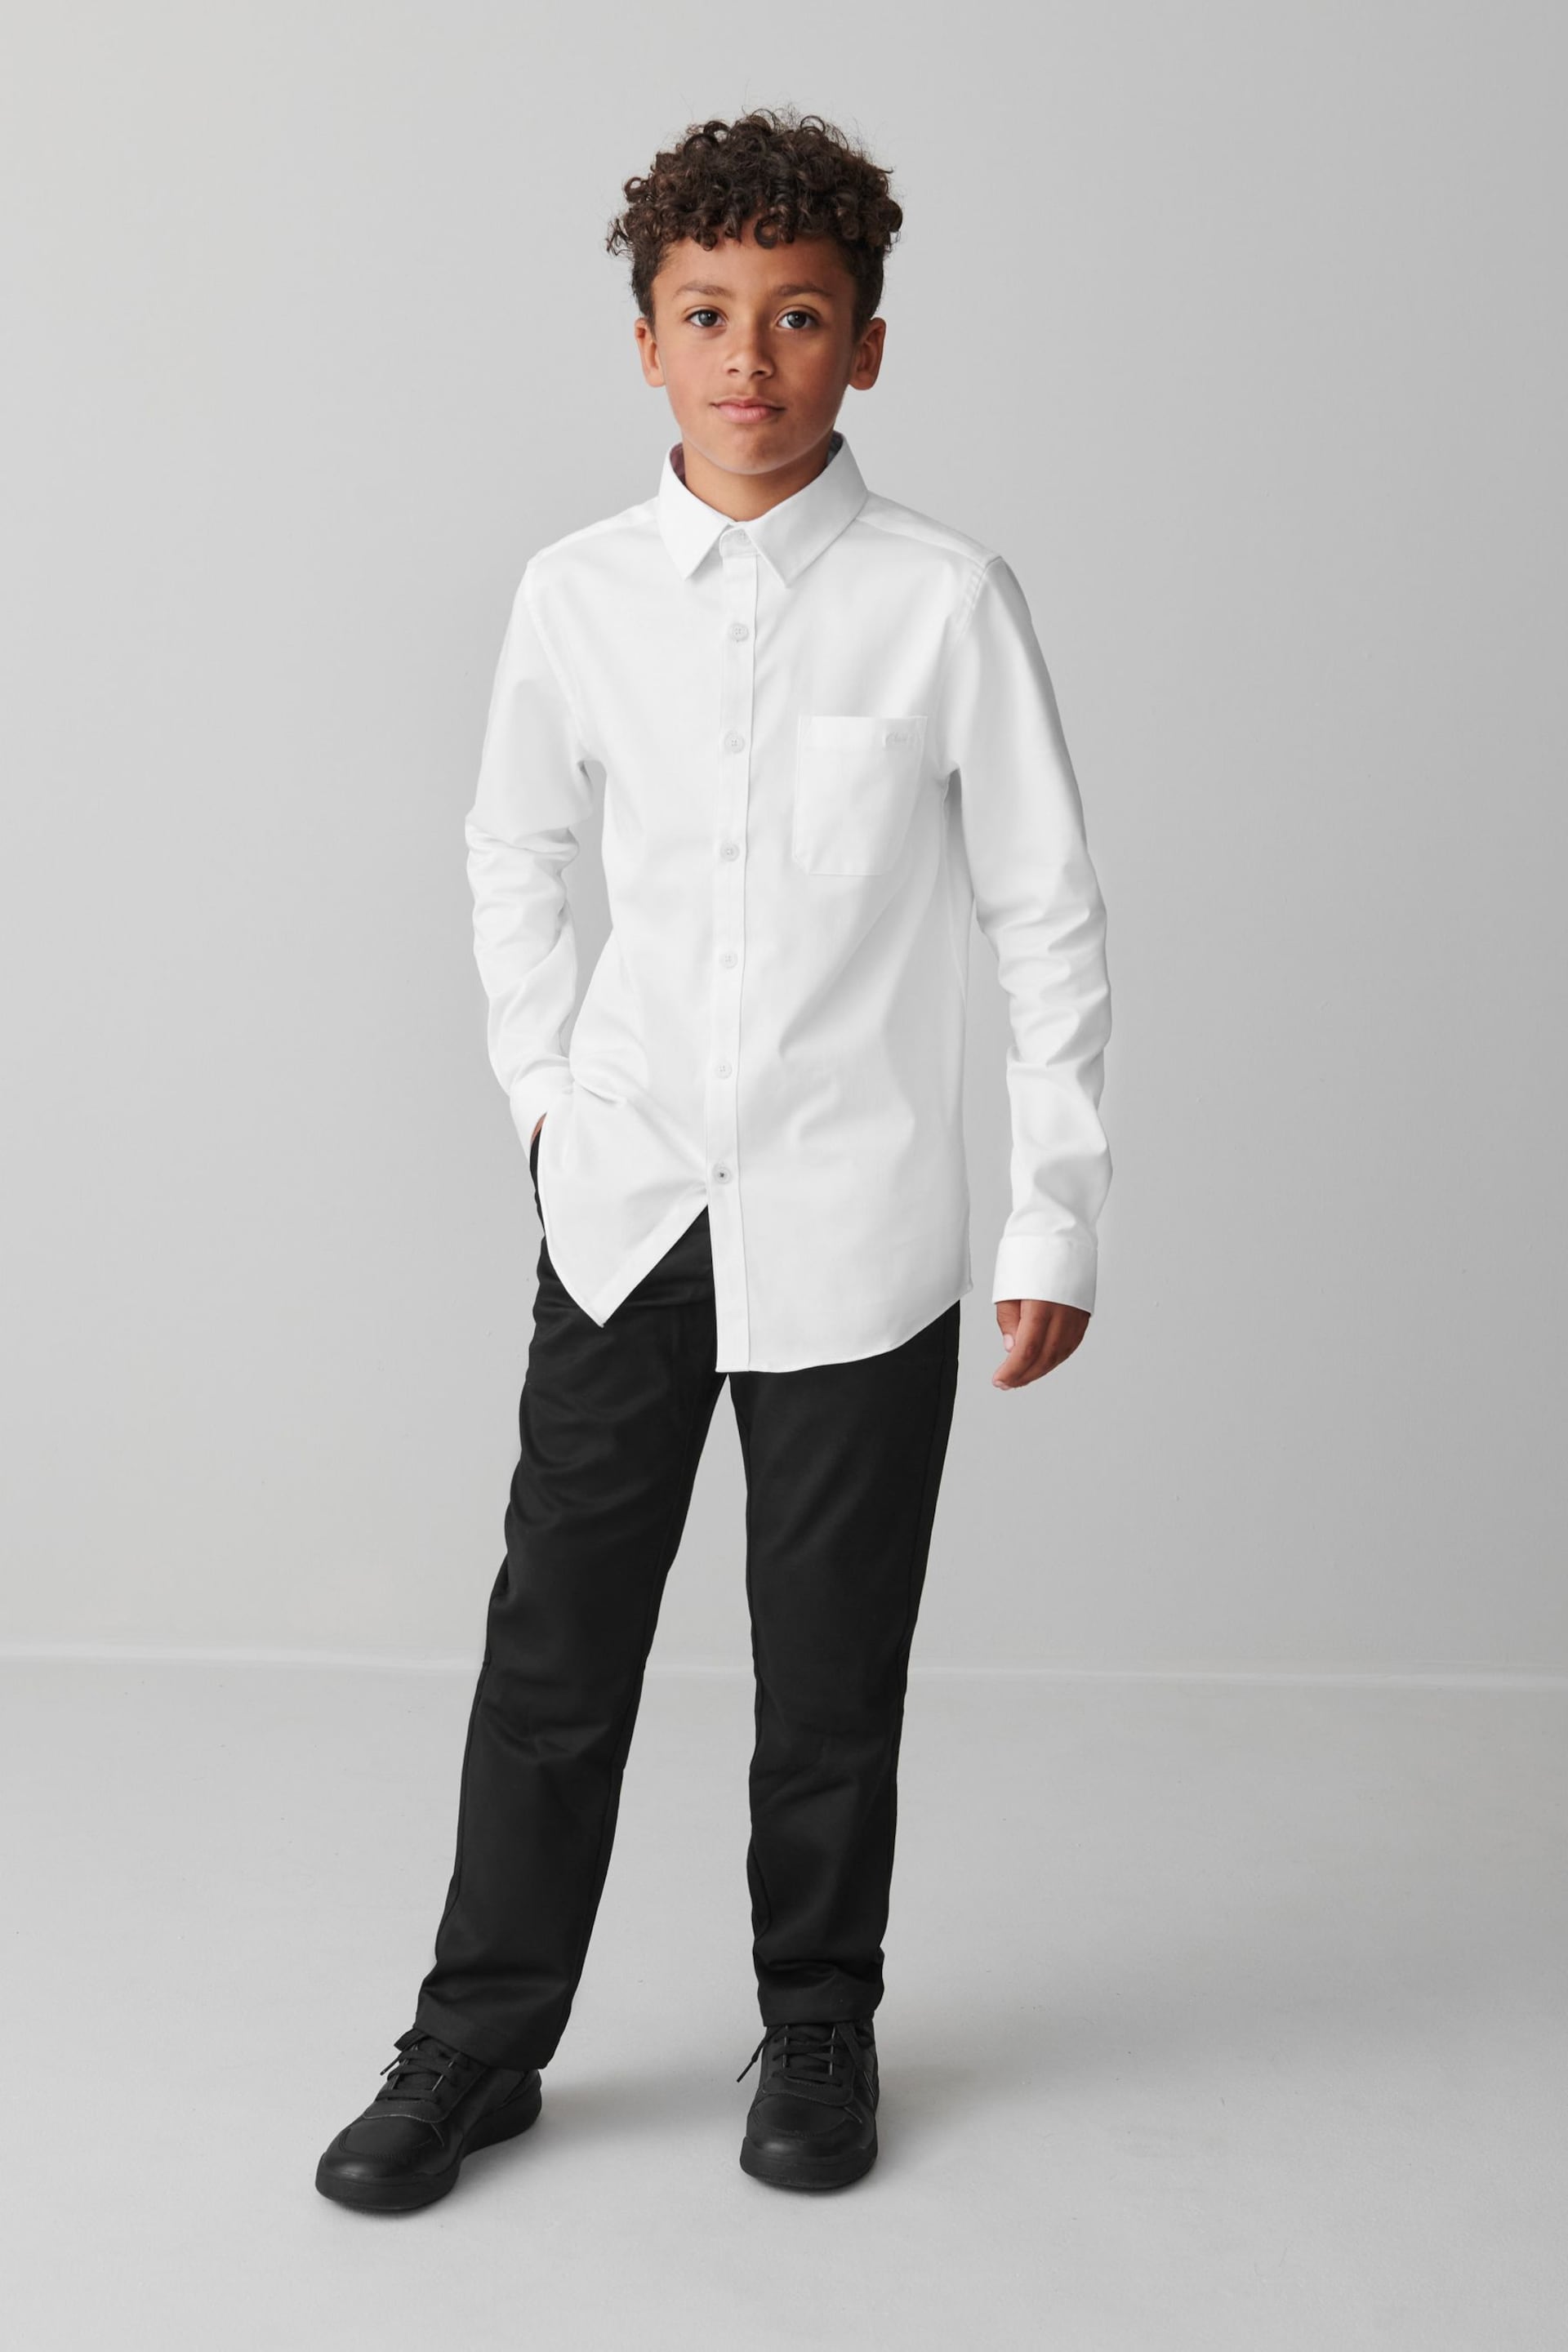 Clarks White Long Sleeve Senior Boys School Shirt with Stretch - Image 1 of 7